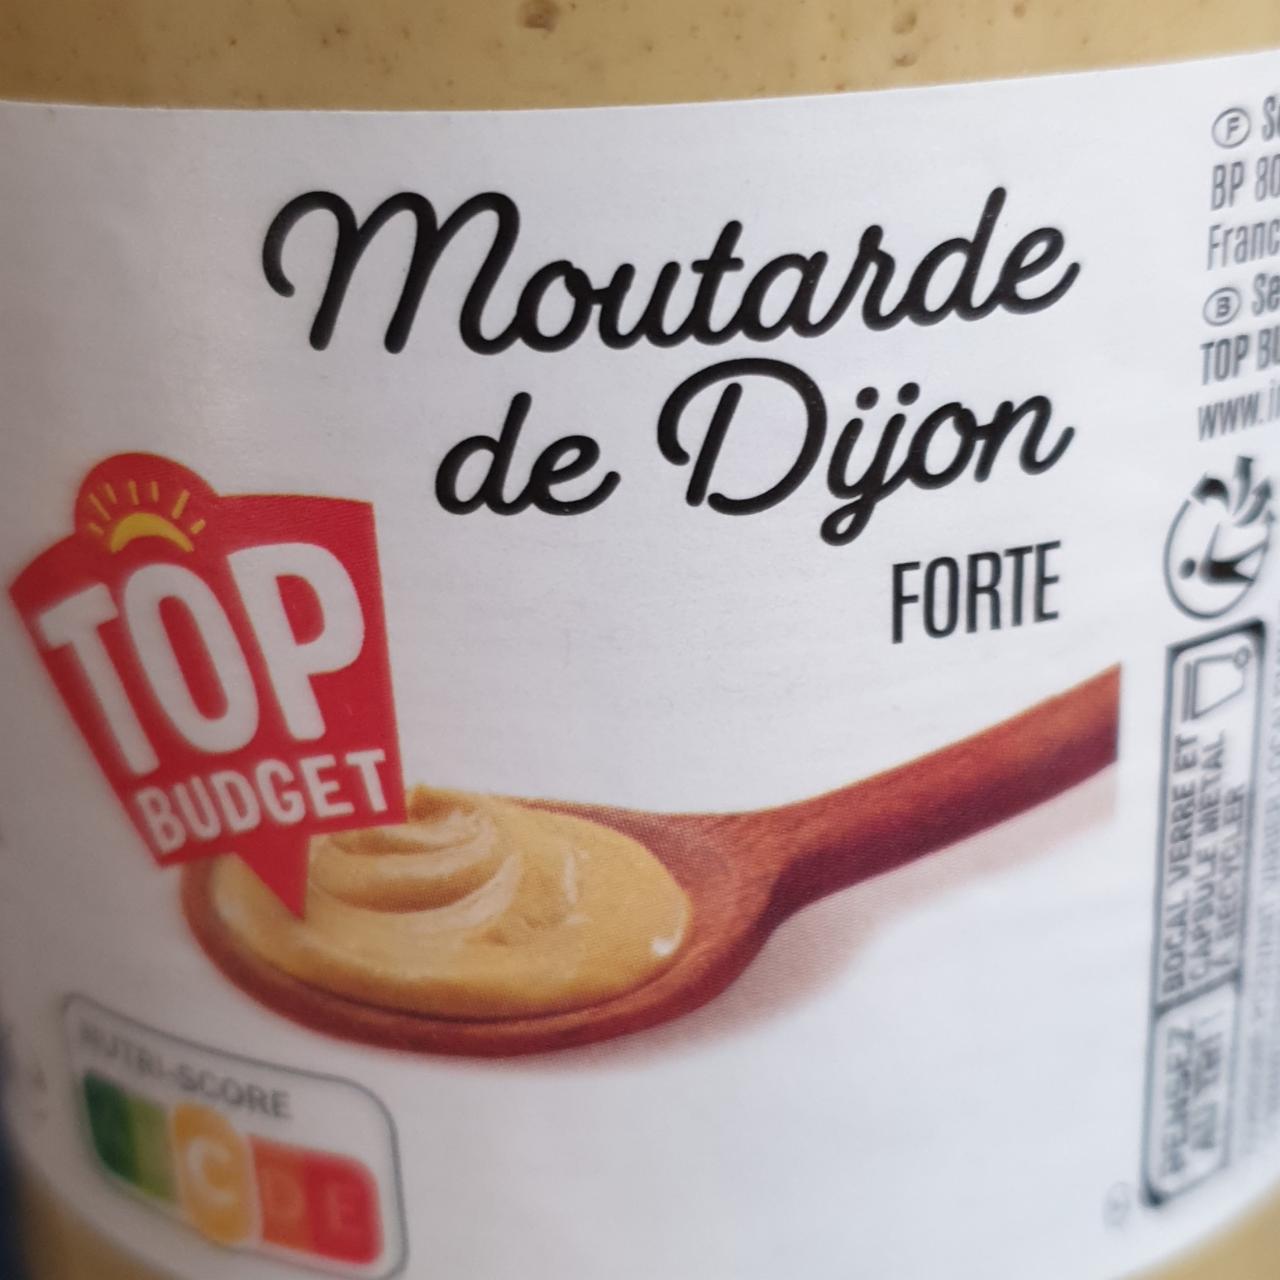 Fotografie - Moutarde de Dijon Forte Top Budget